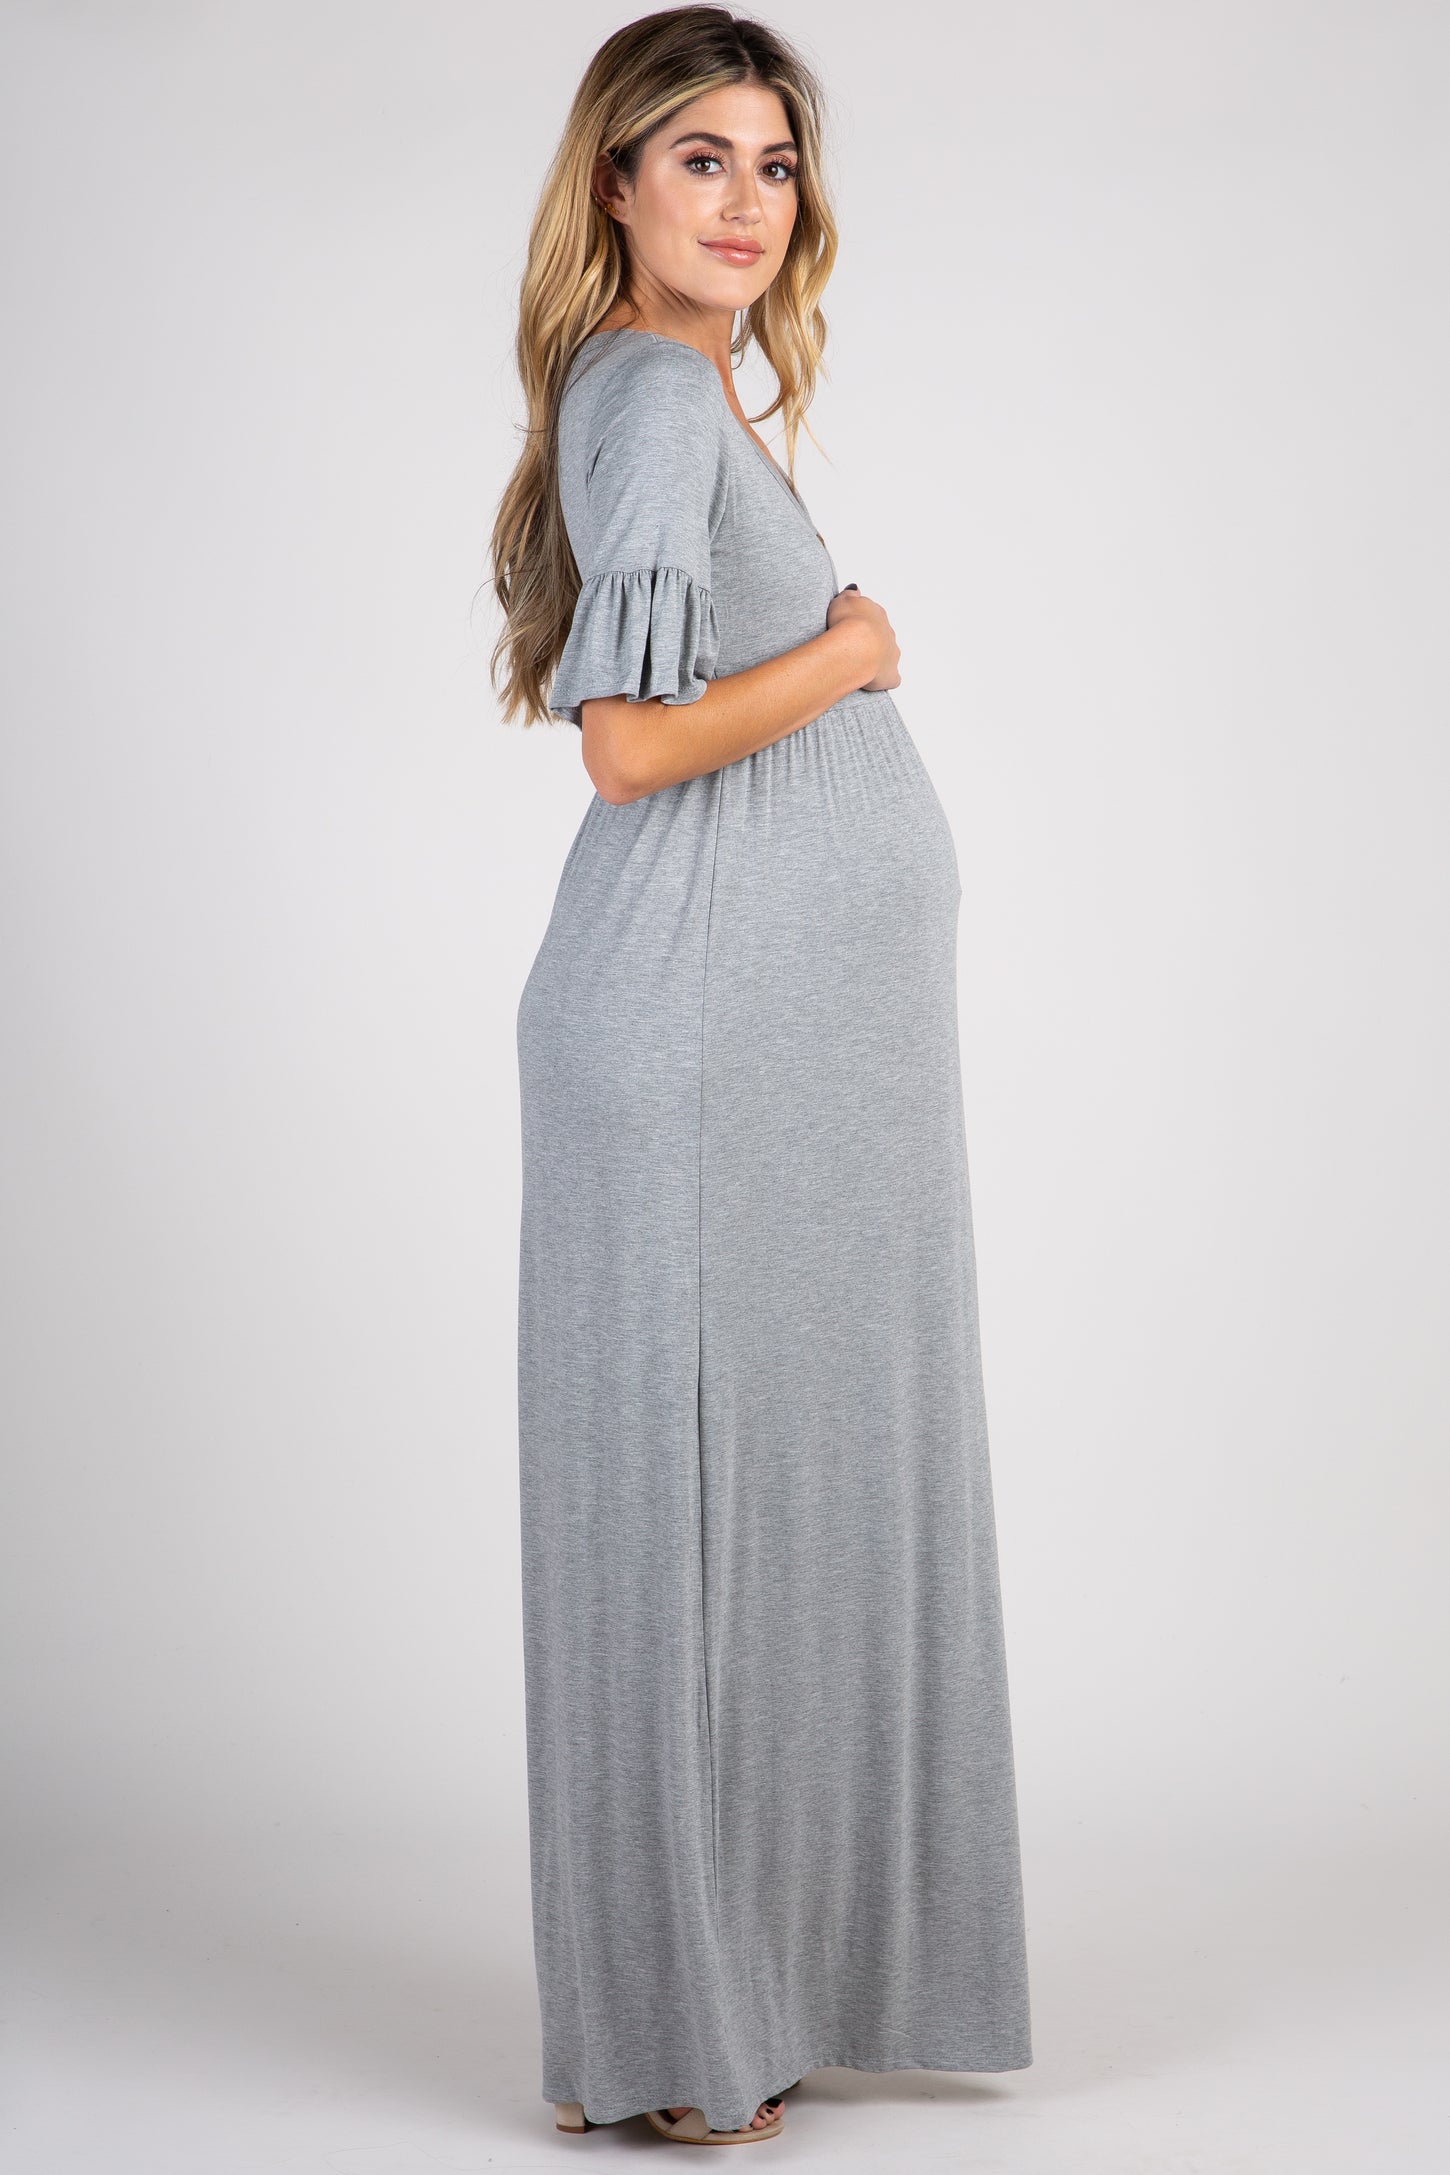 Heather Grey Button Ruffle Sleeve Maternity Maxi Dress